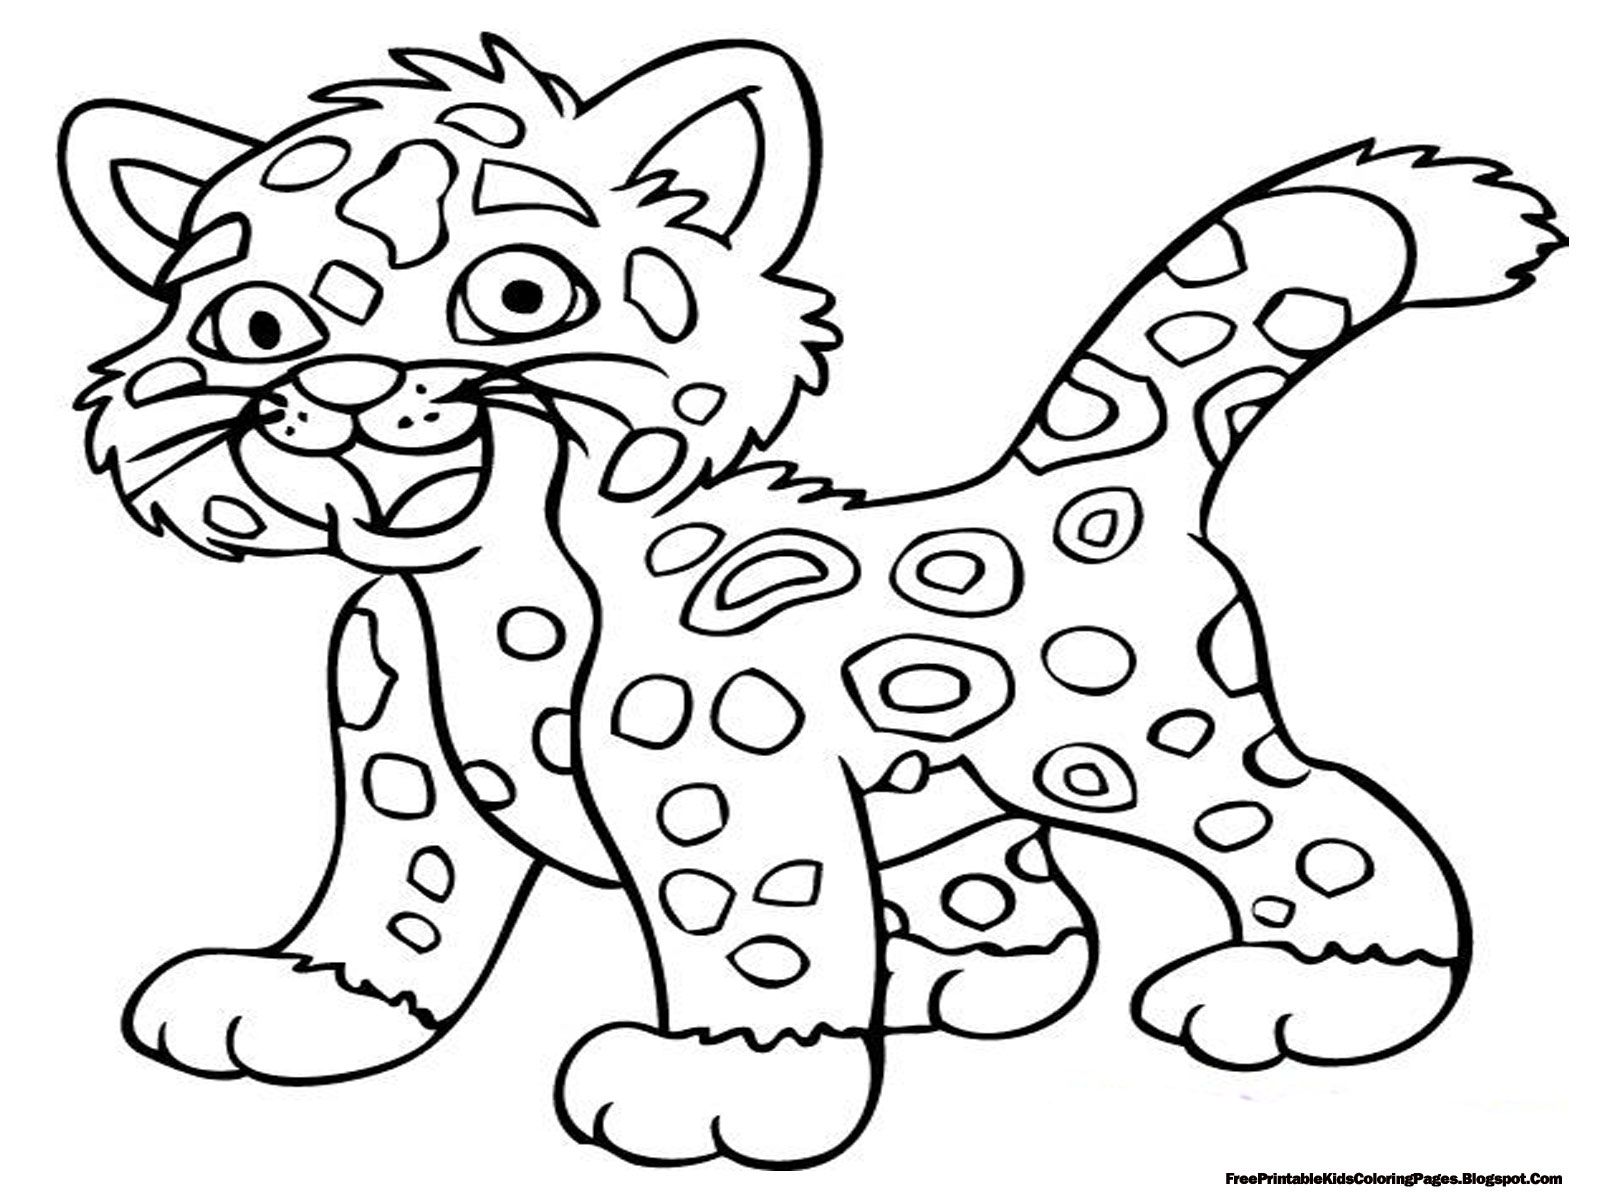 Jaguar Coloring Pages - Free Printable Kids Coloring Pages